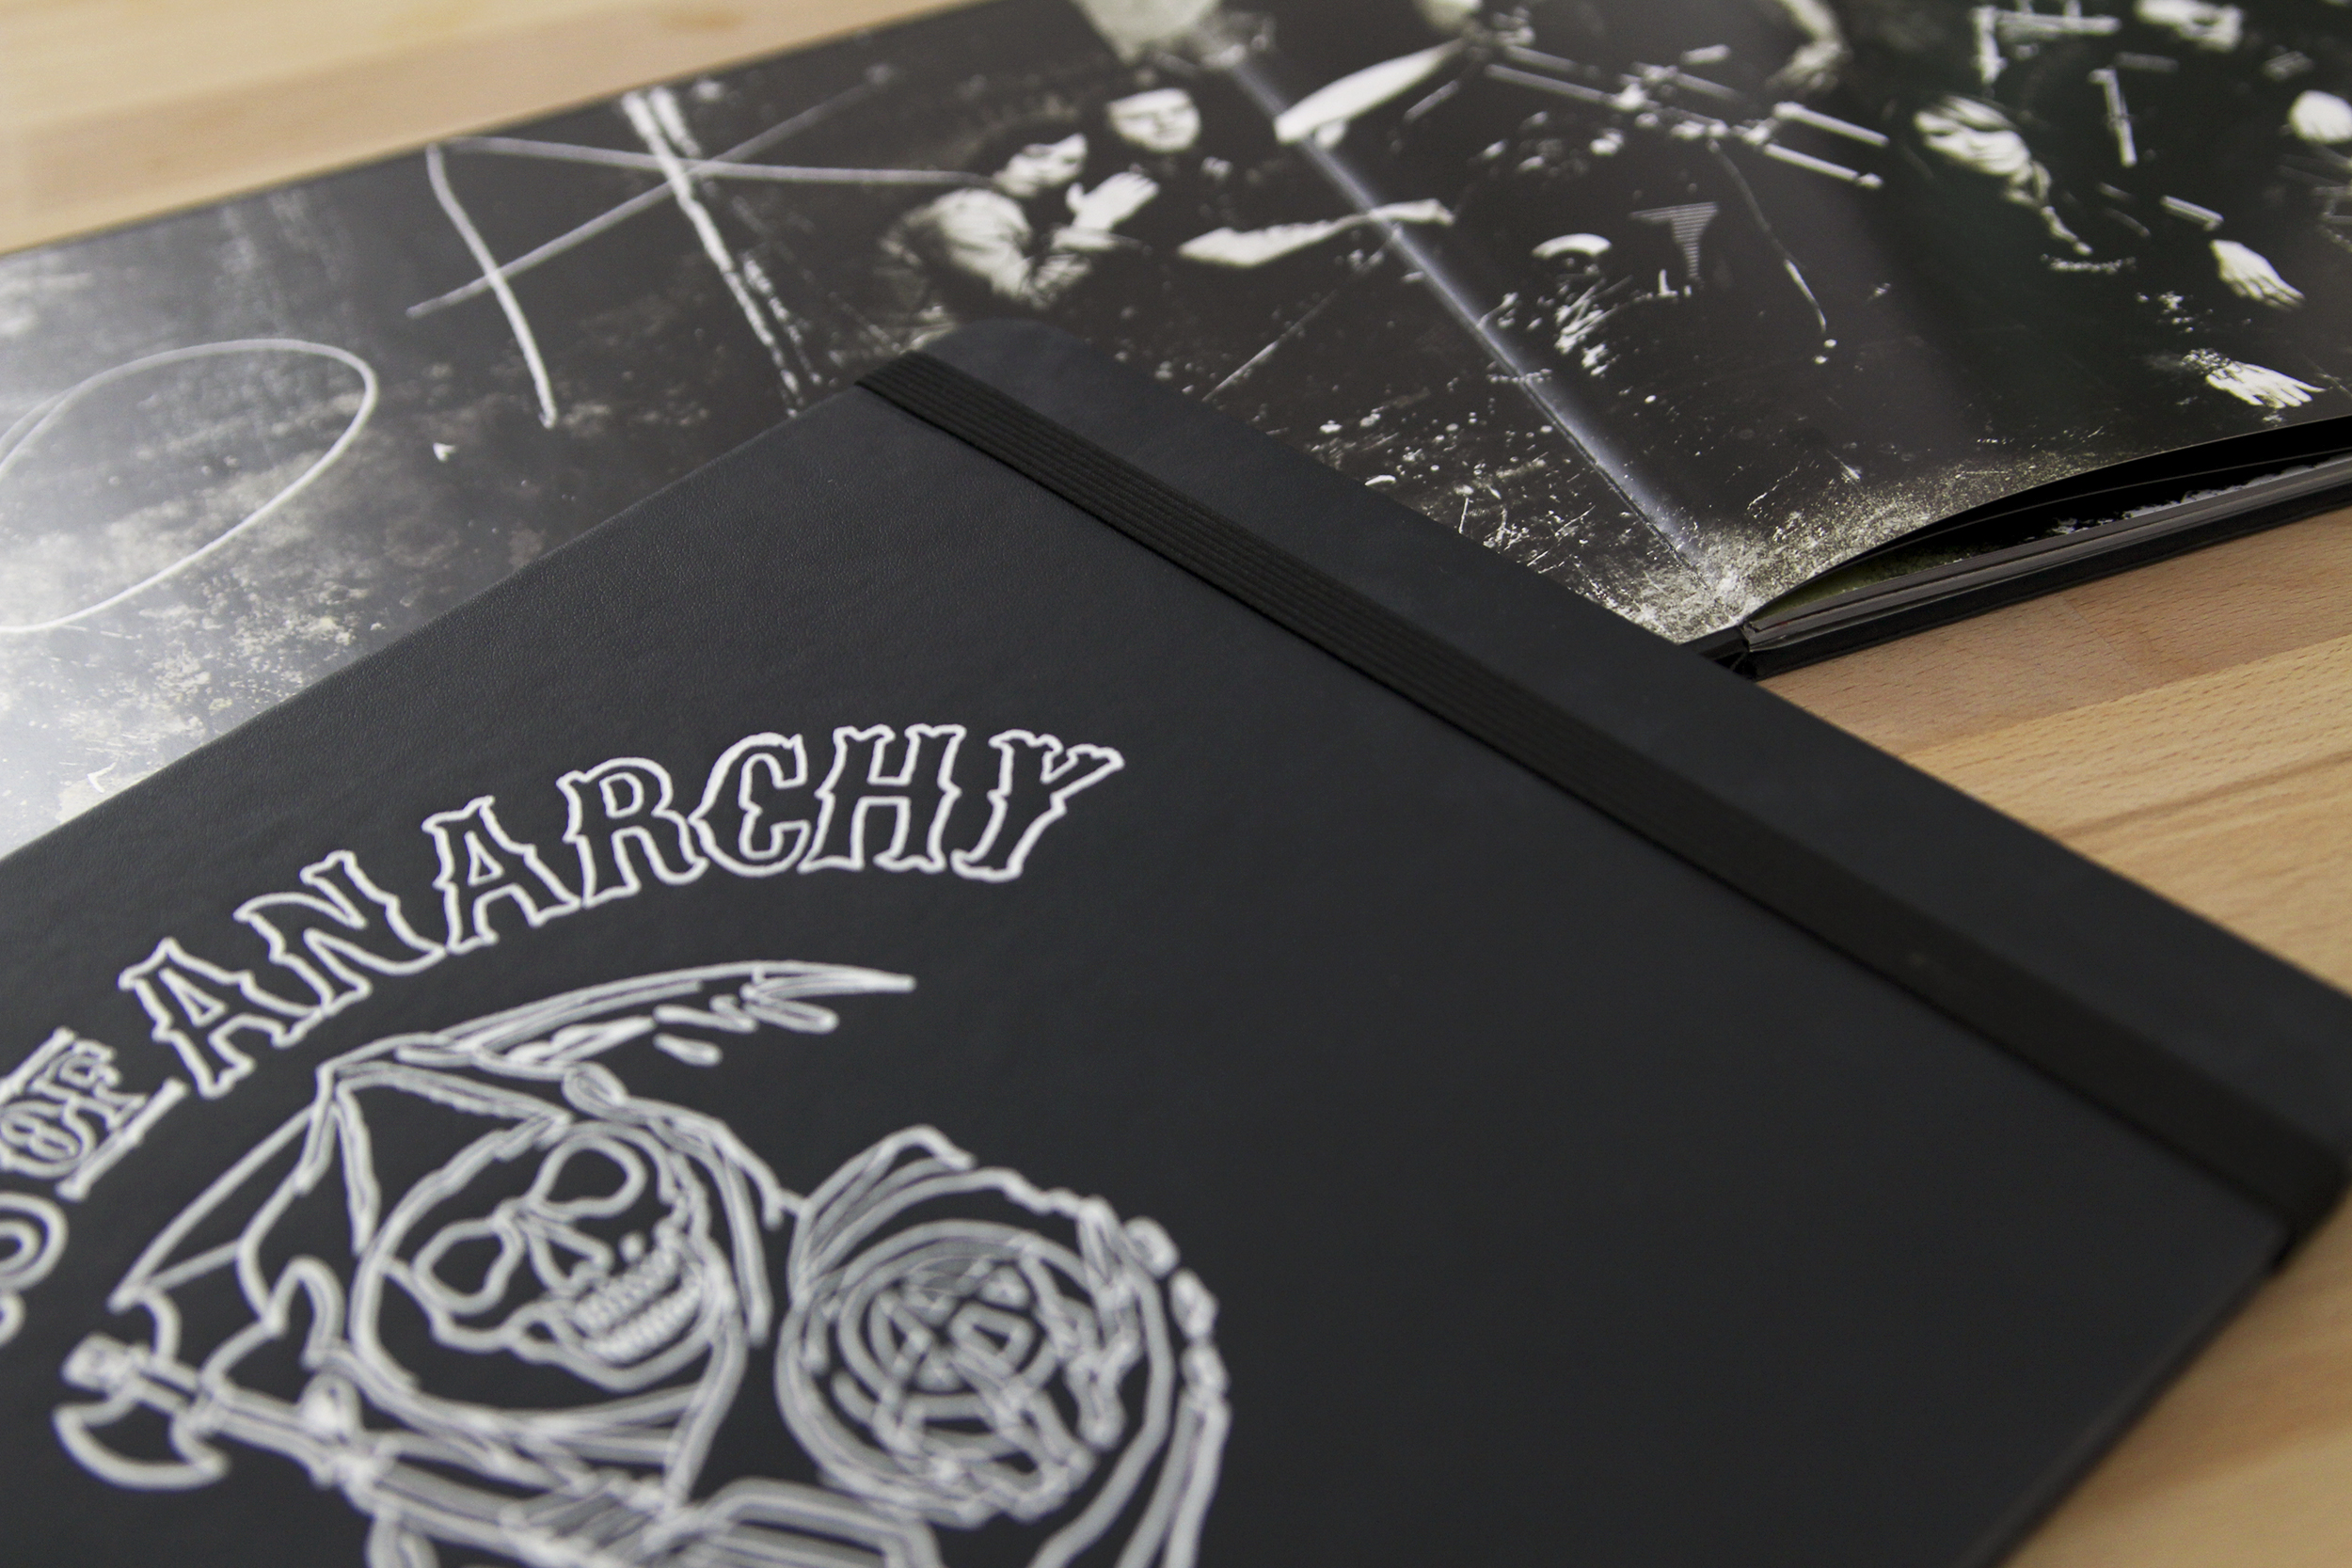 Sons of Anarchy Season 4 Press Kit